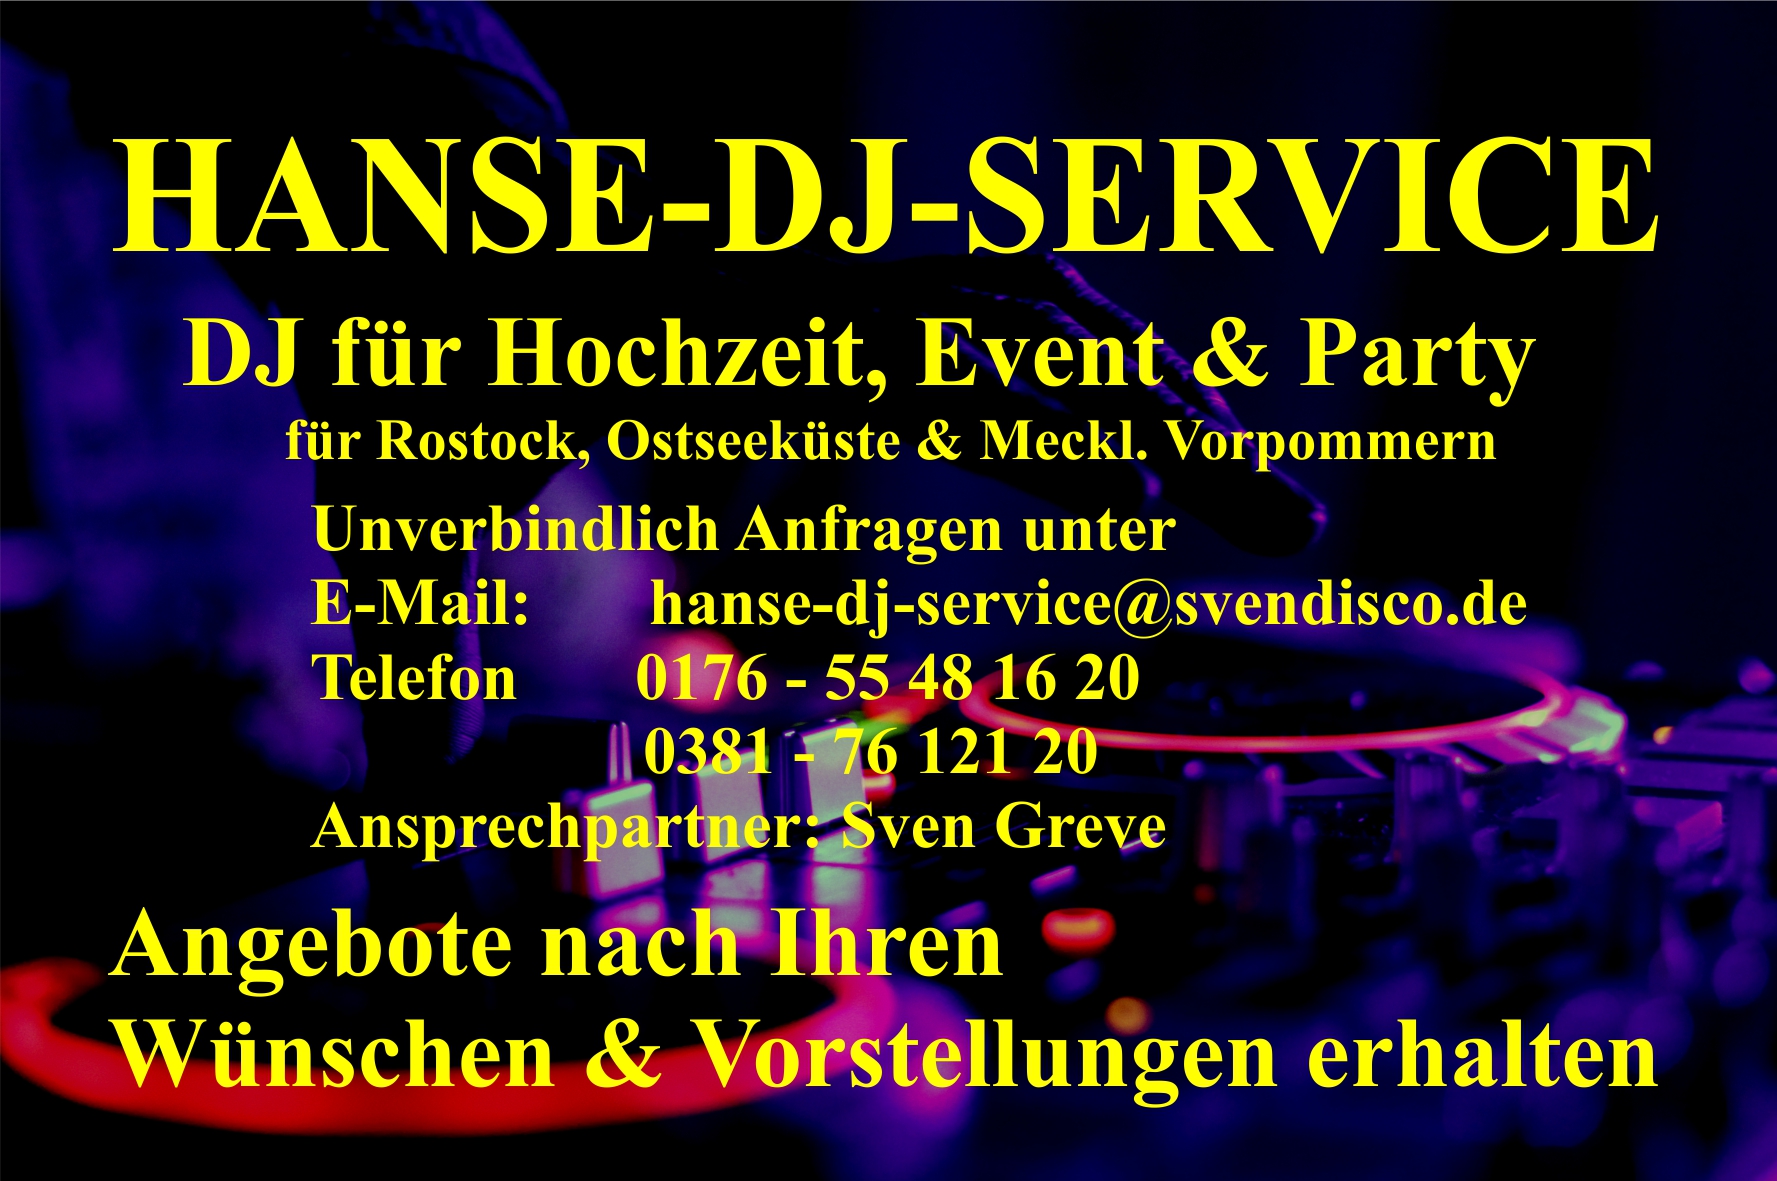 Hanse-DJ-Svervice